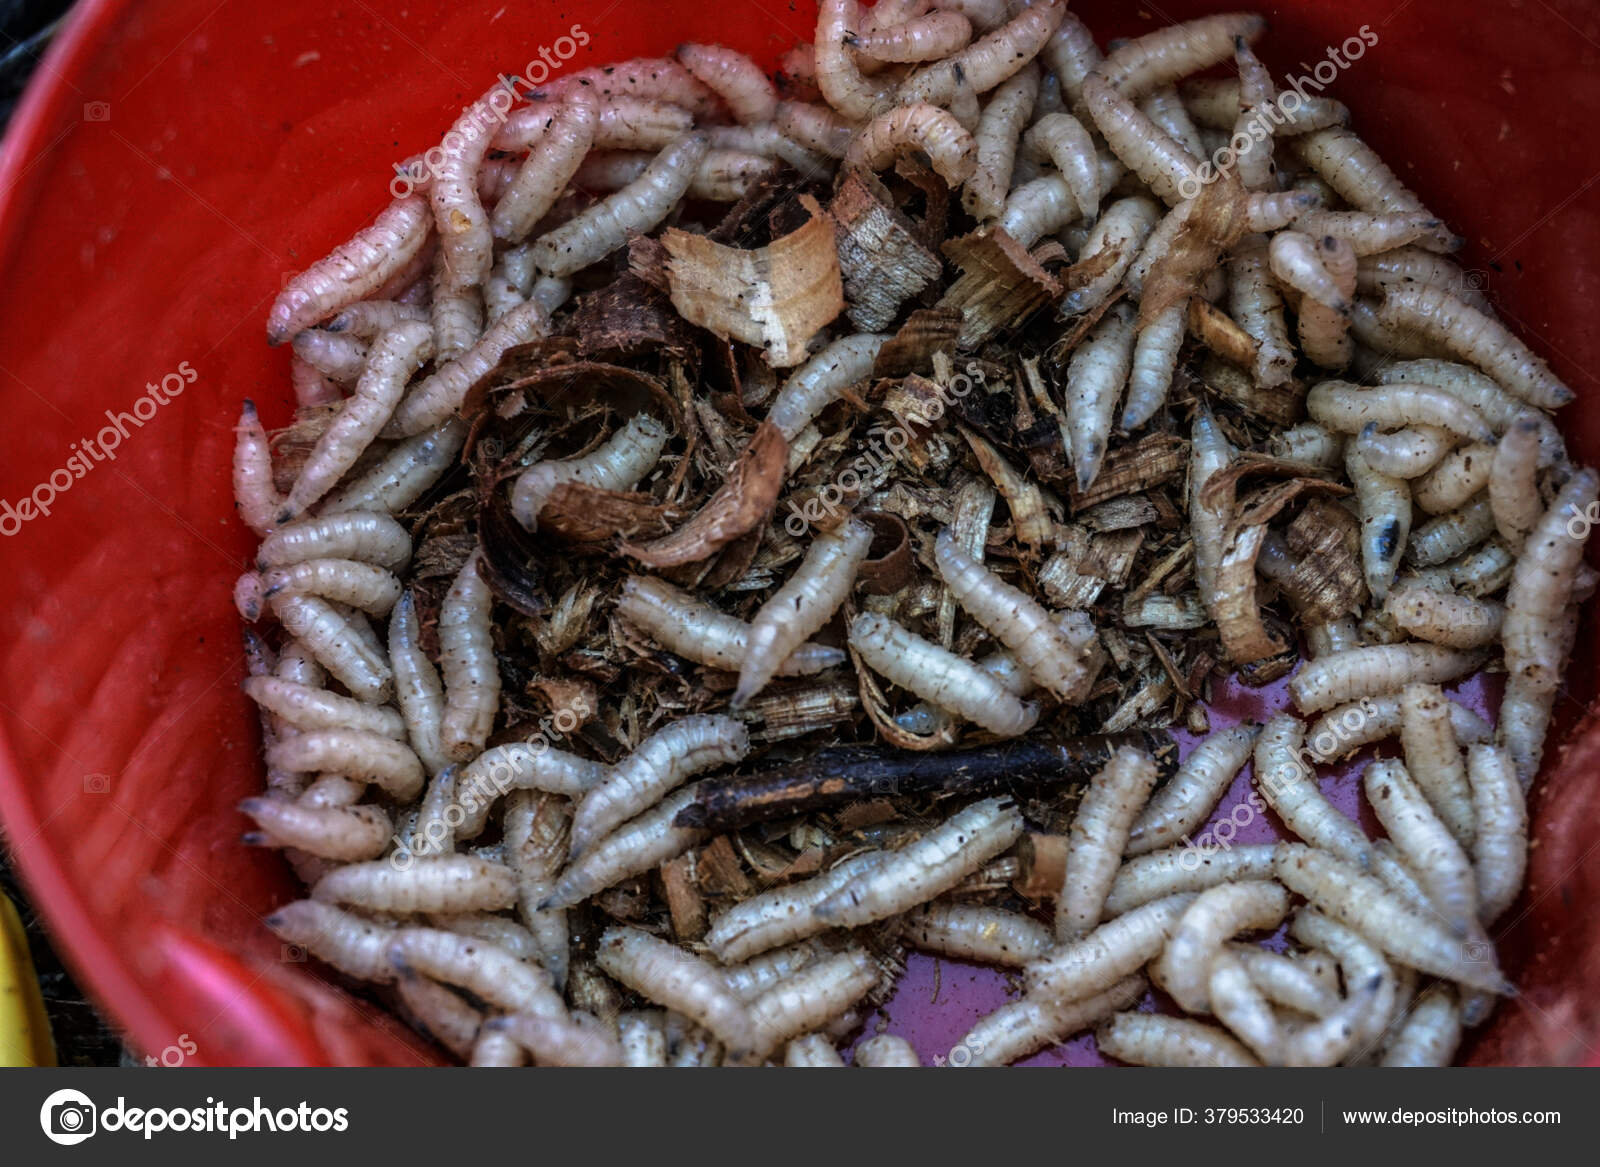 Maggots Fisherman Boxes Grass Twigs River White Worms Jar Food